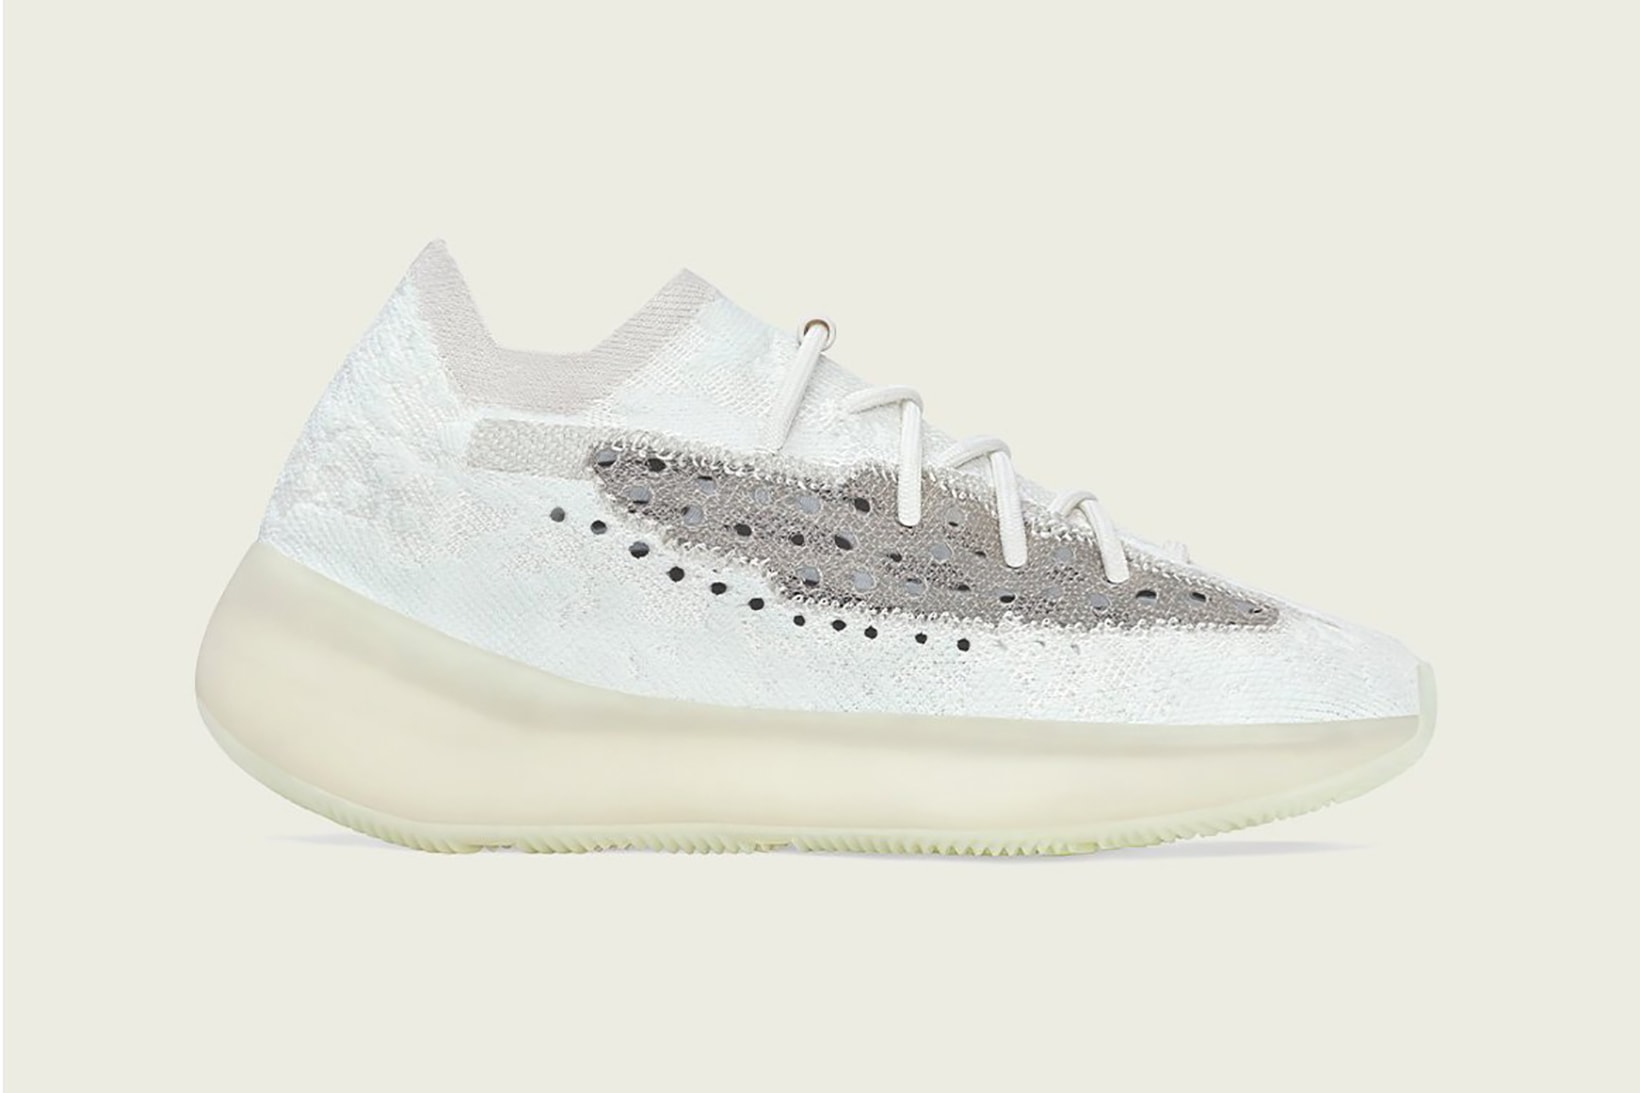 adidas kanye west yeezy boost 380 sneakers calcite glow cream white gray colorway shoes footwear sneakerhead